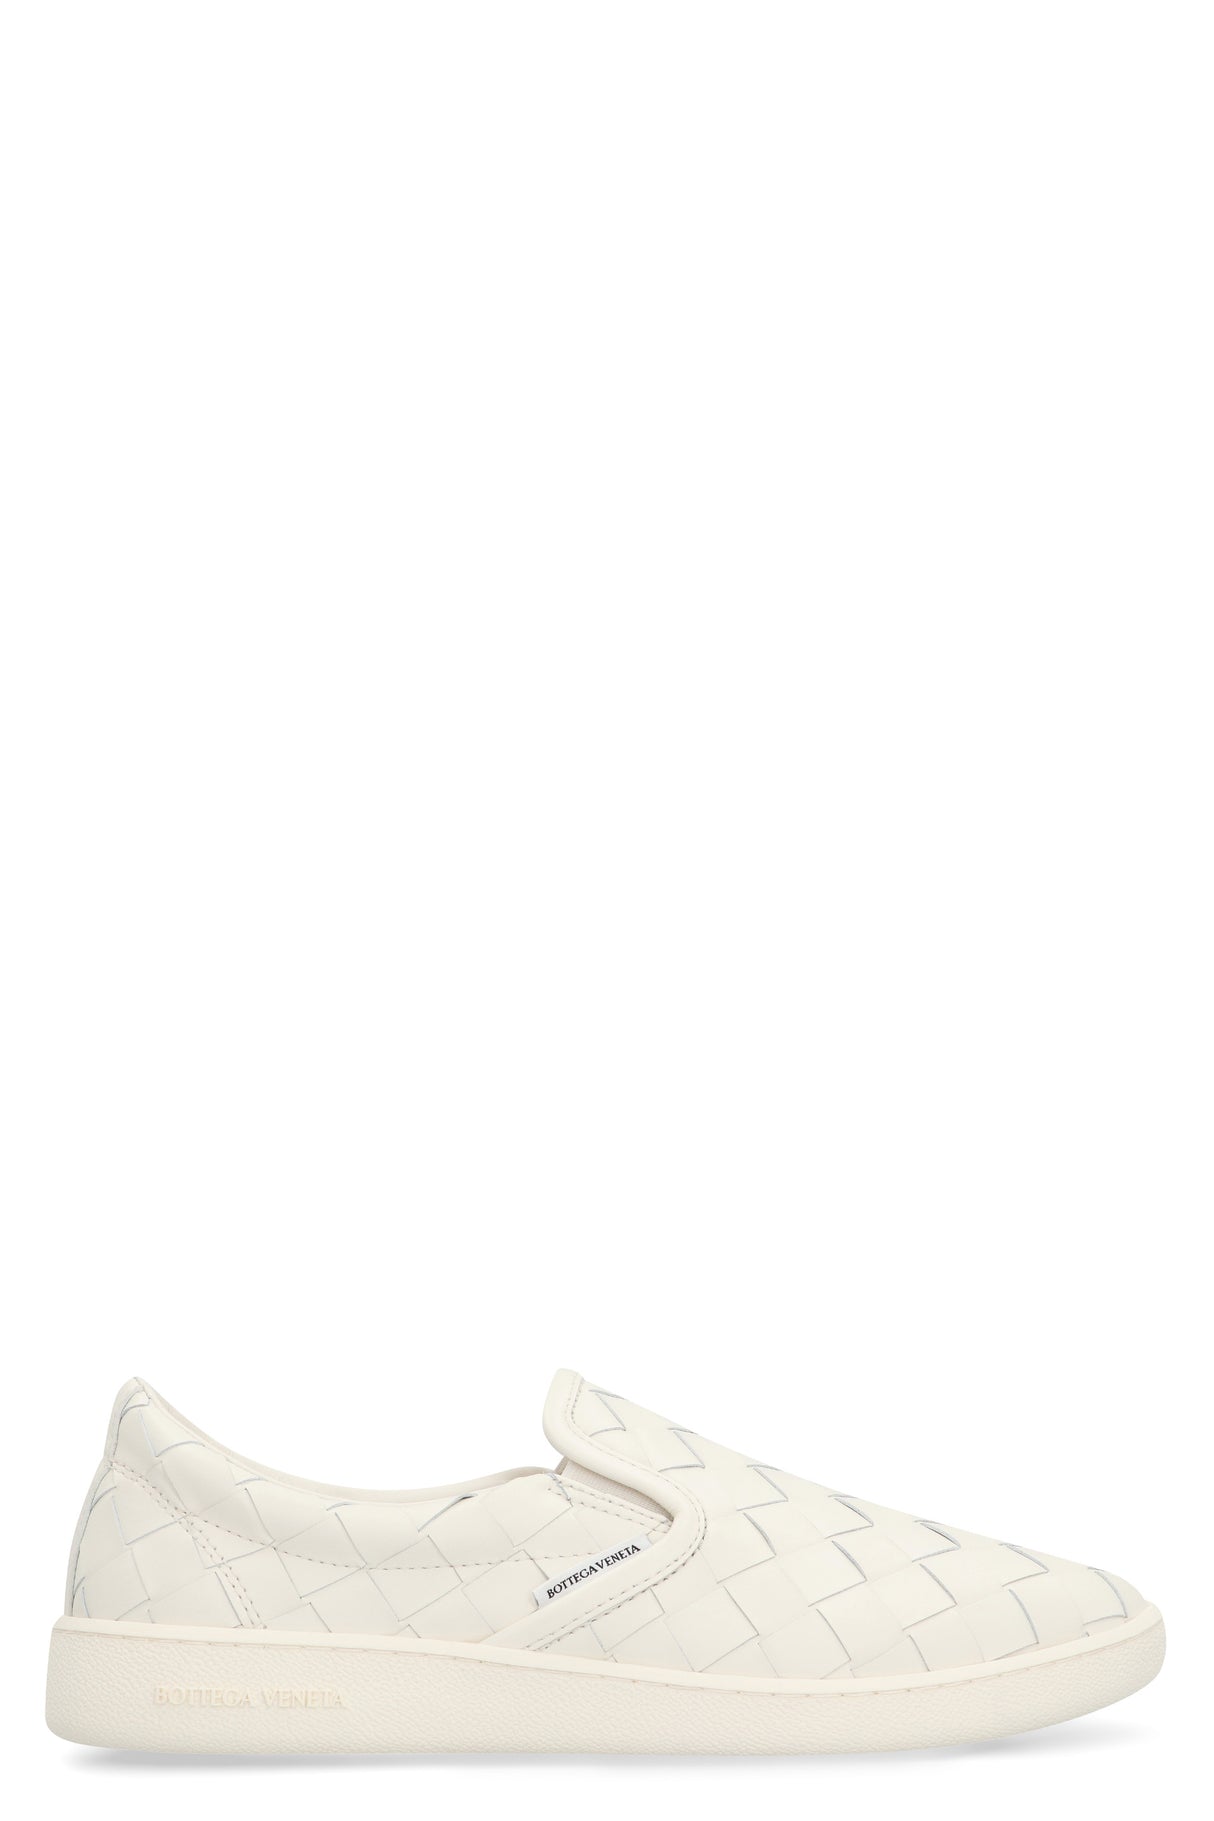 BOTTEGA VENETA Woven Leather Sneakers for Women in Classic White